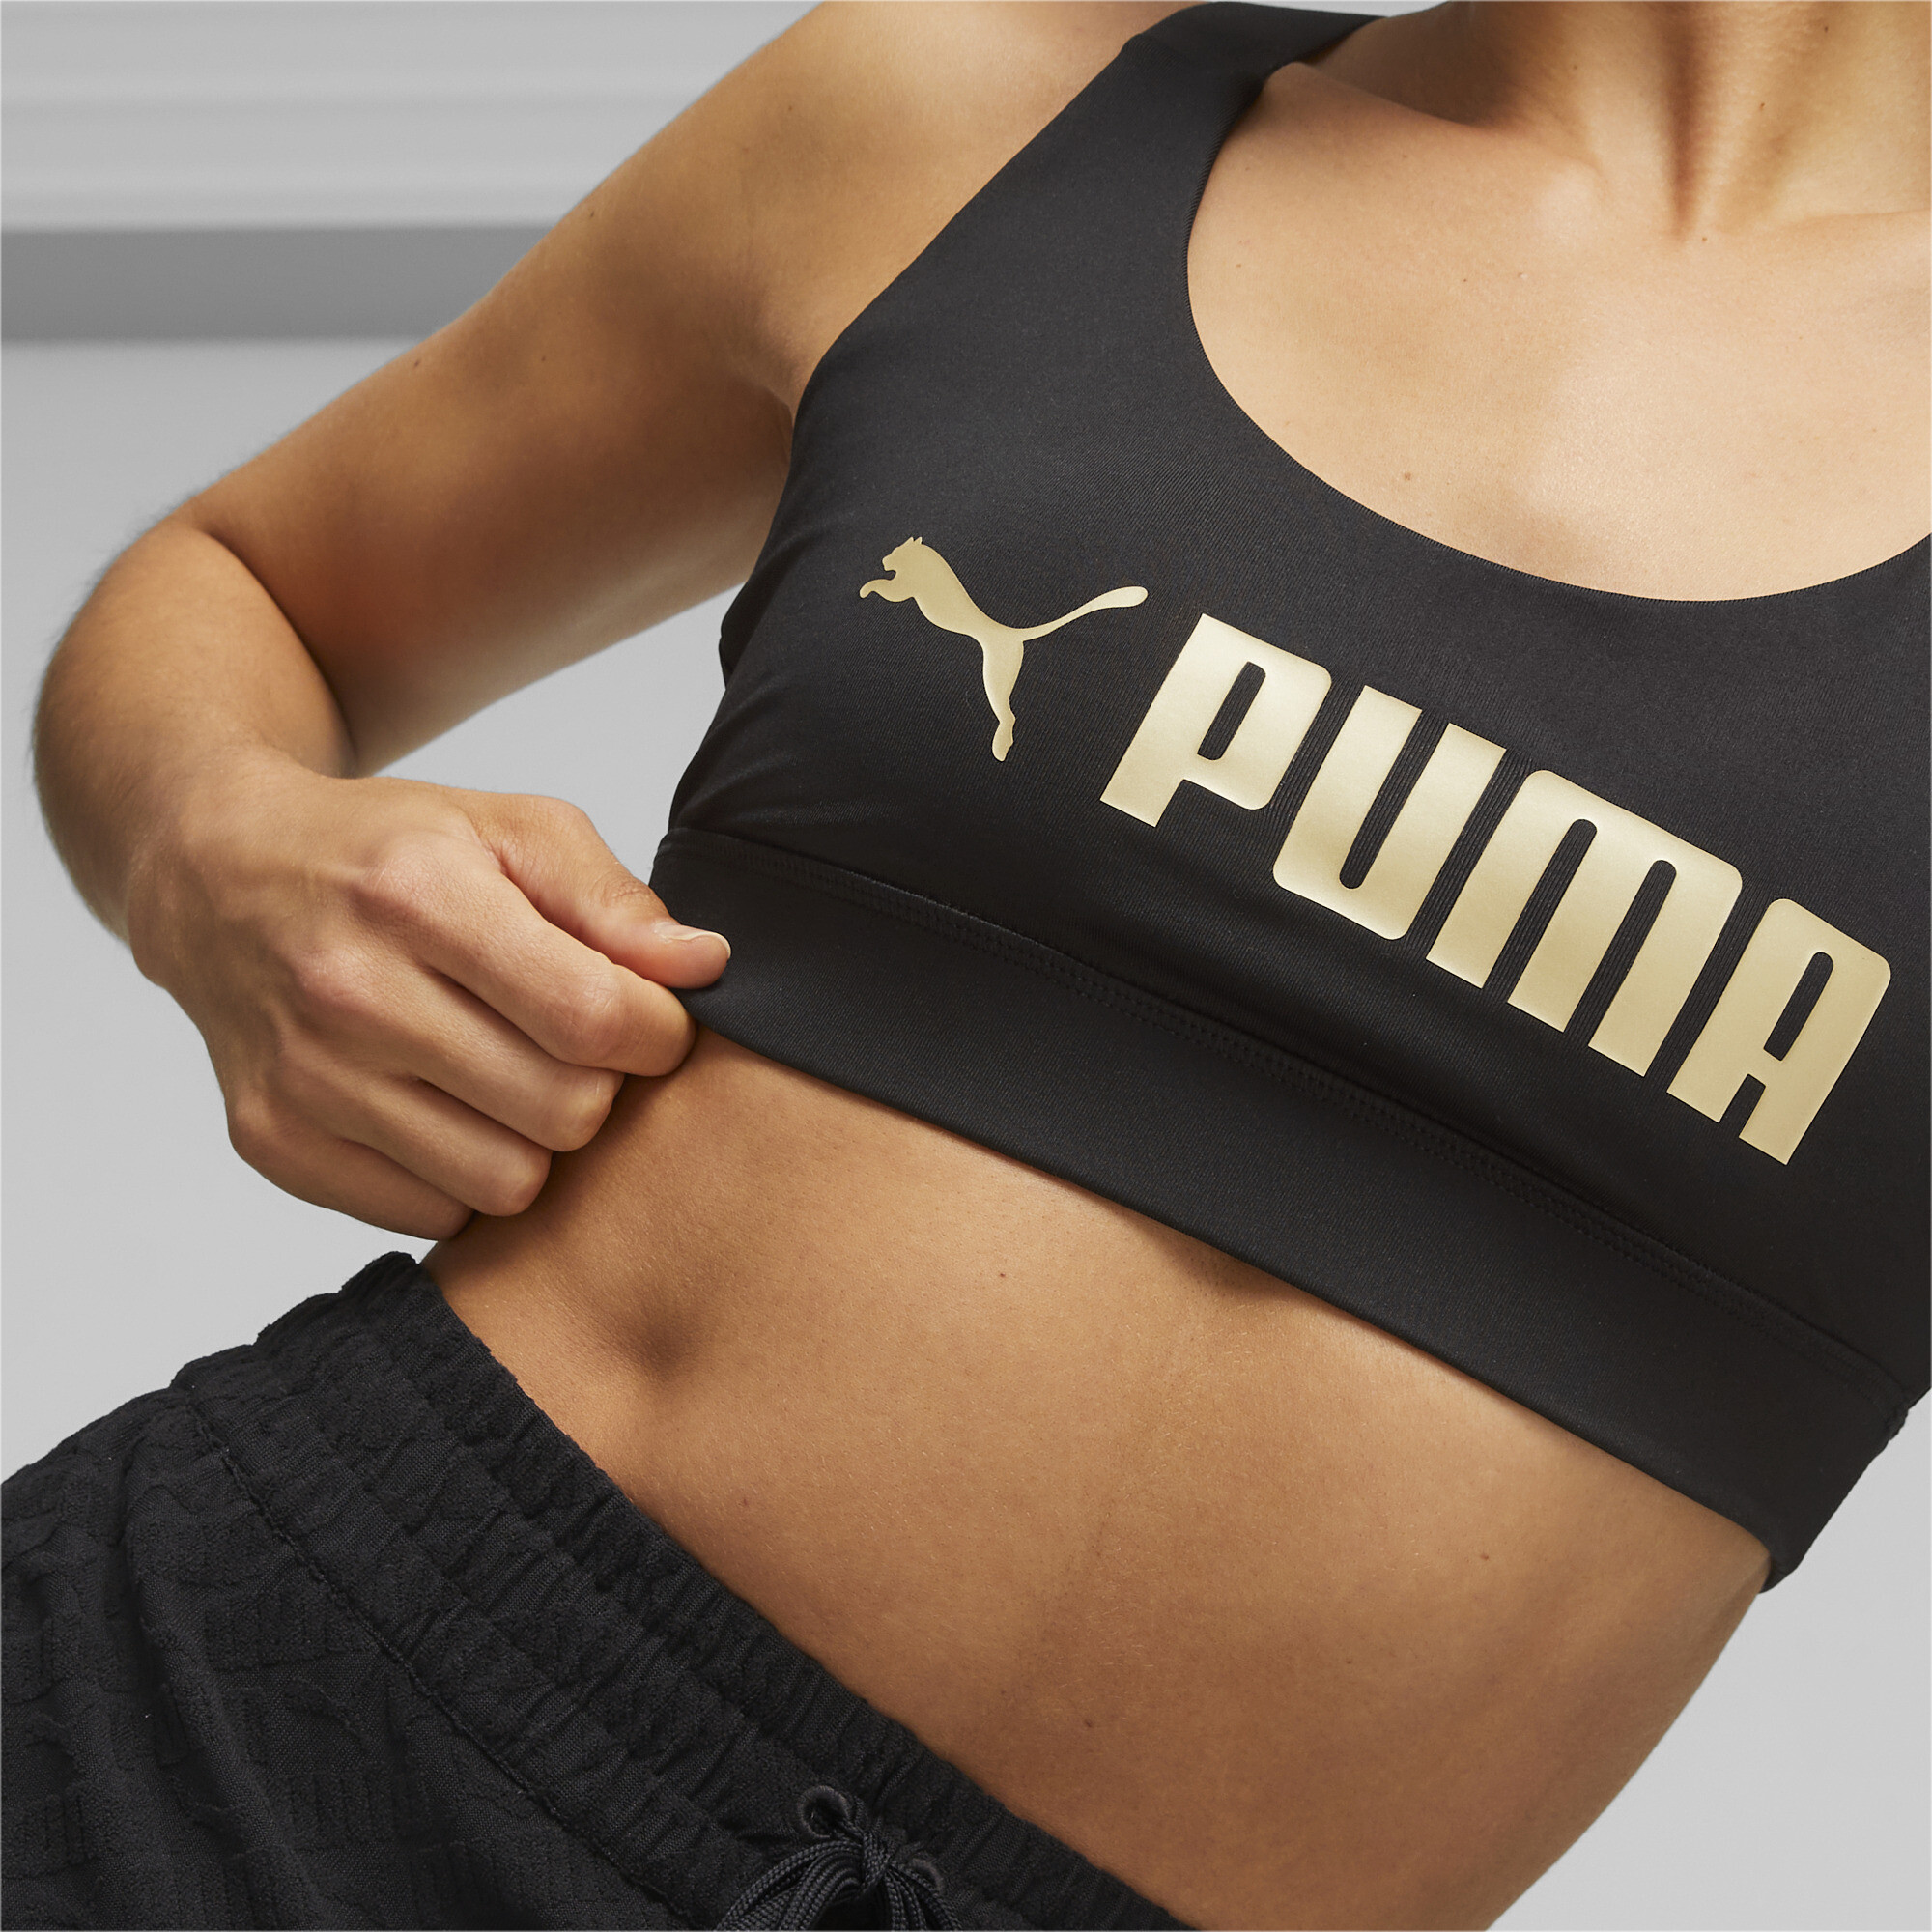 Women's Puma Fit Mid Impact Training Bra, Black, Size XS, Clothing